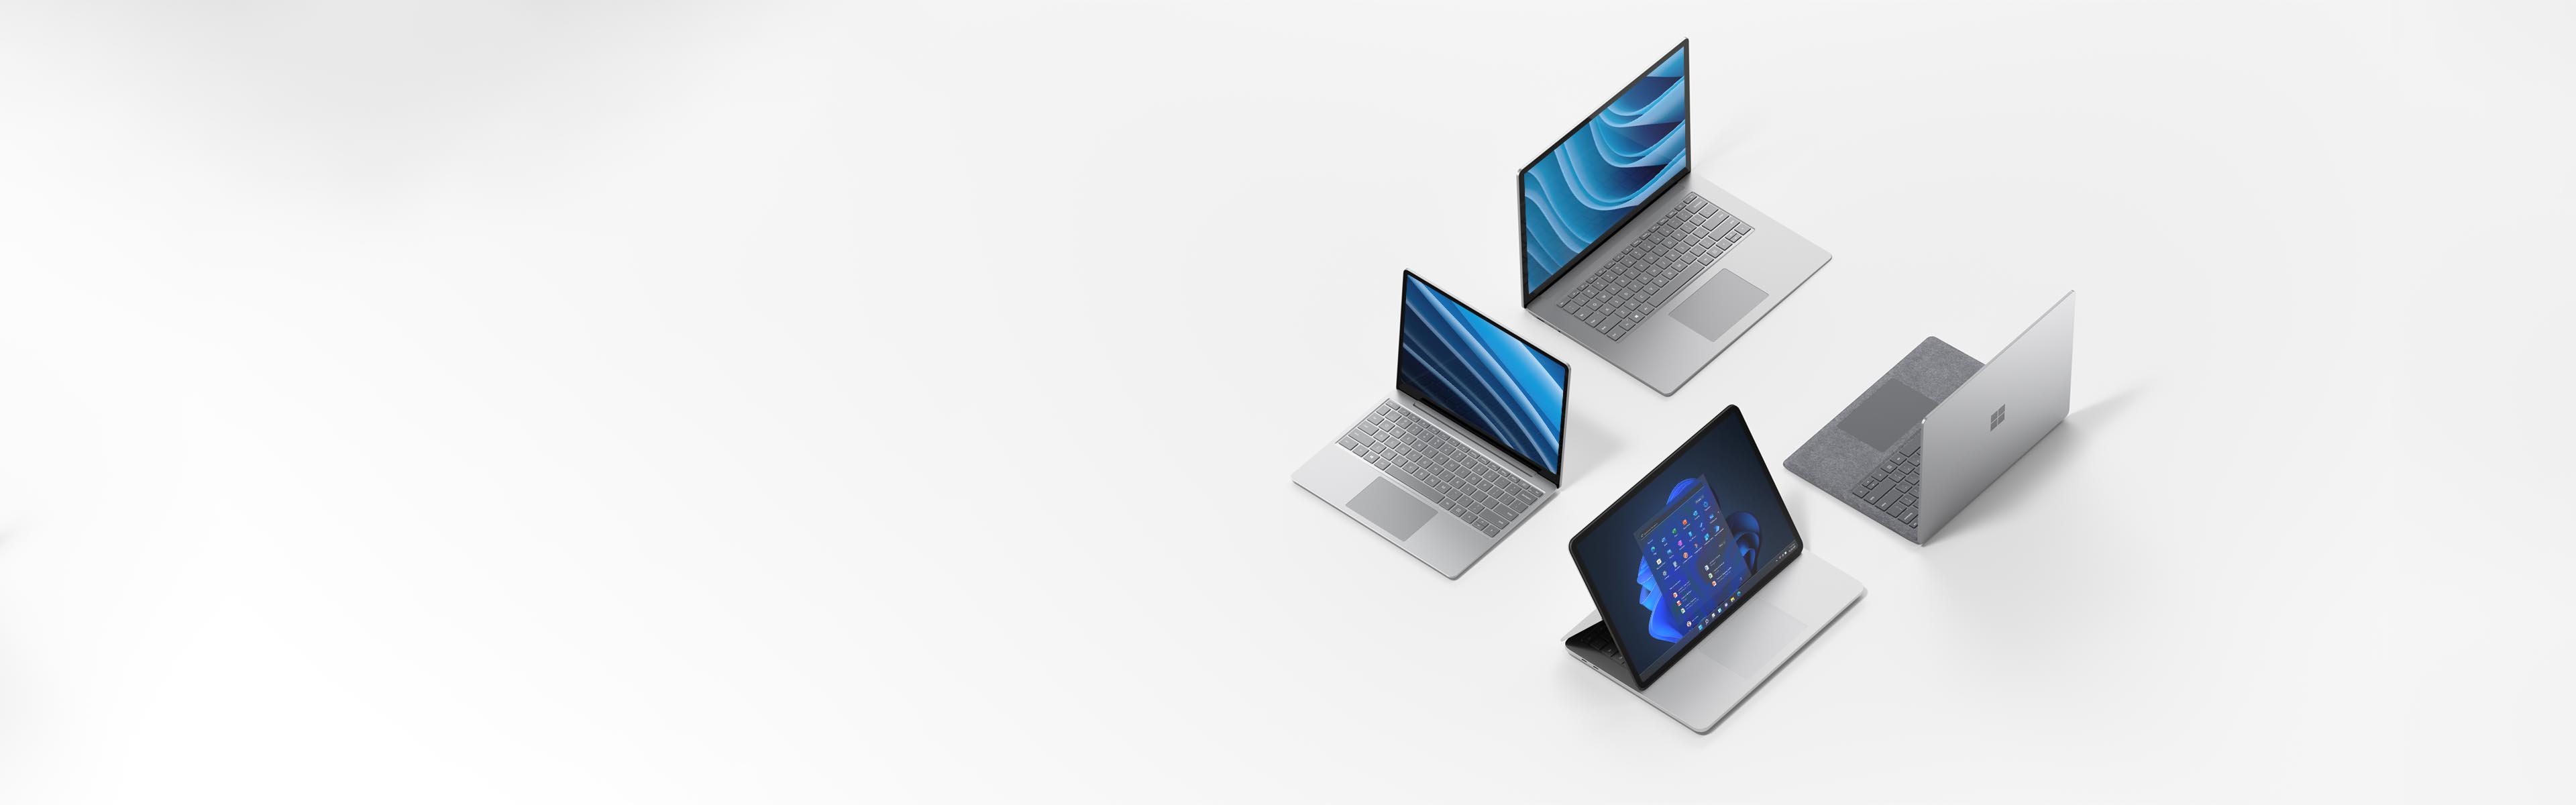 The latest Microsoft Surface device portfolio